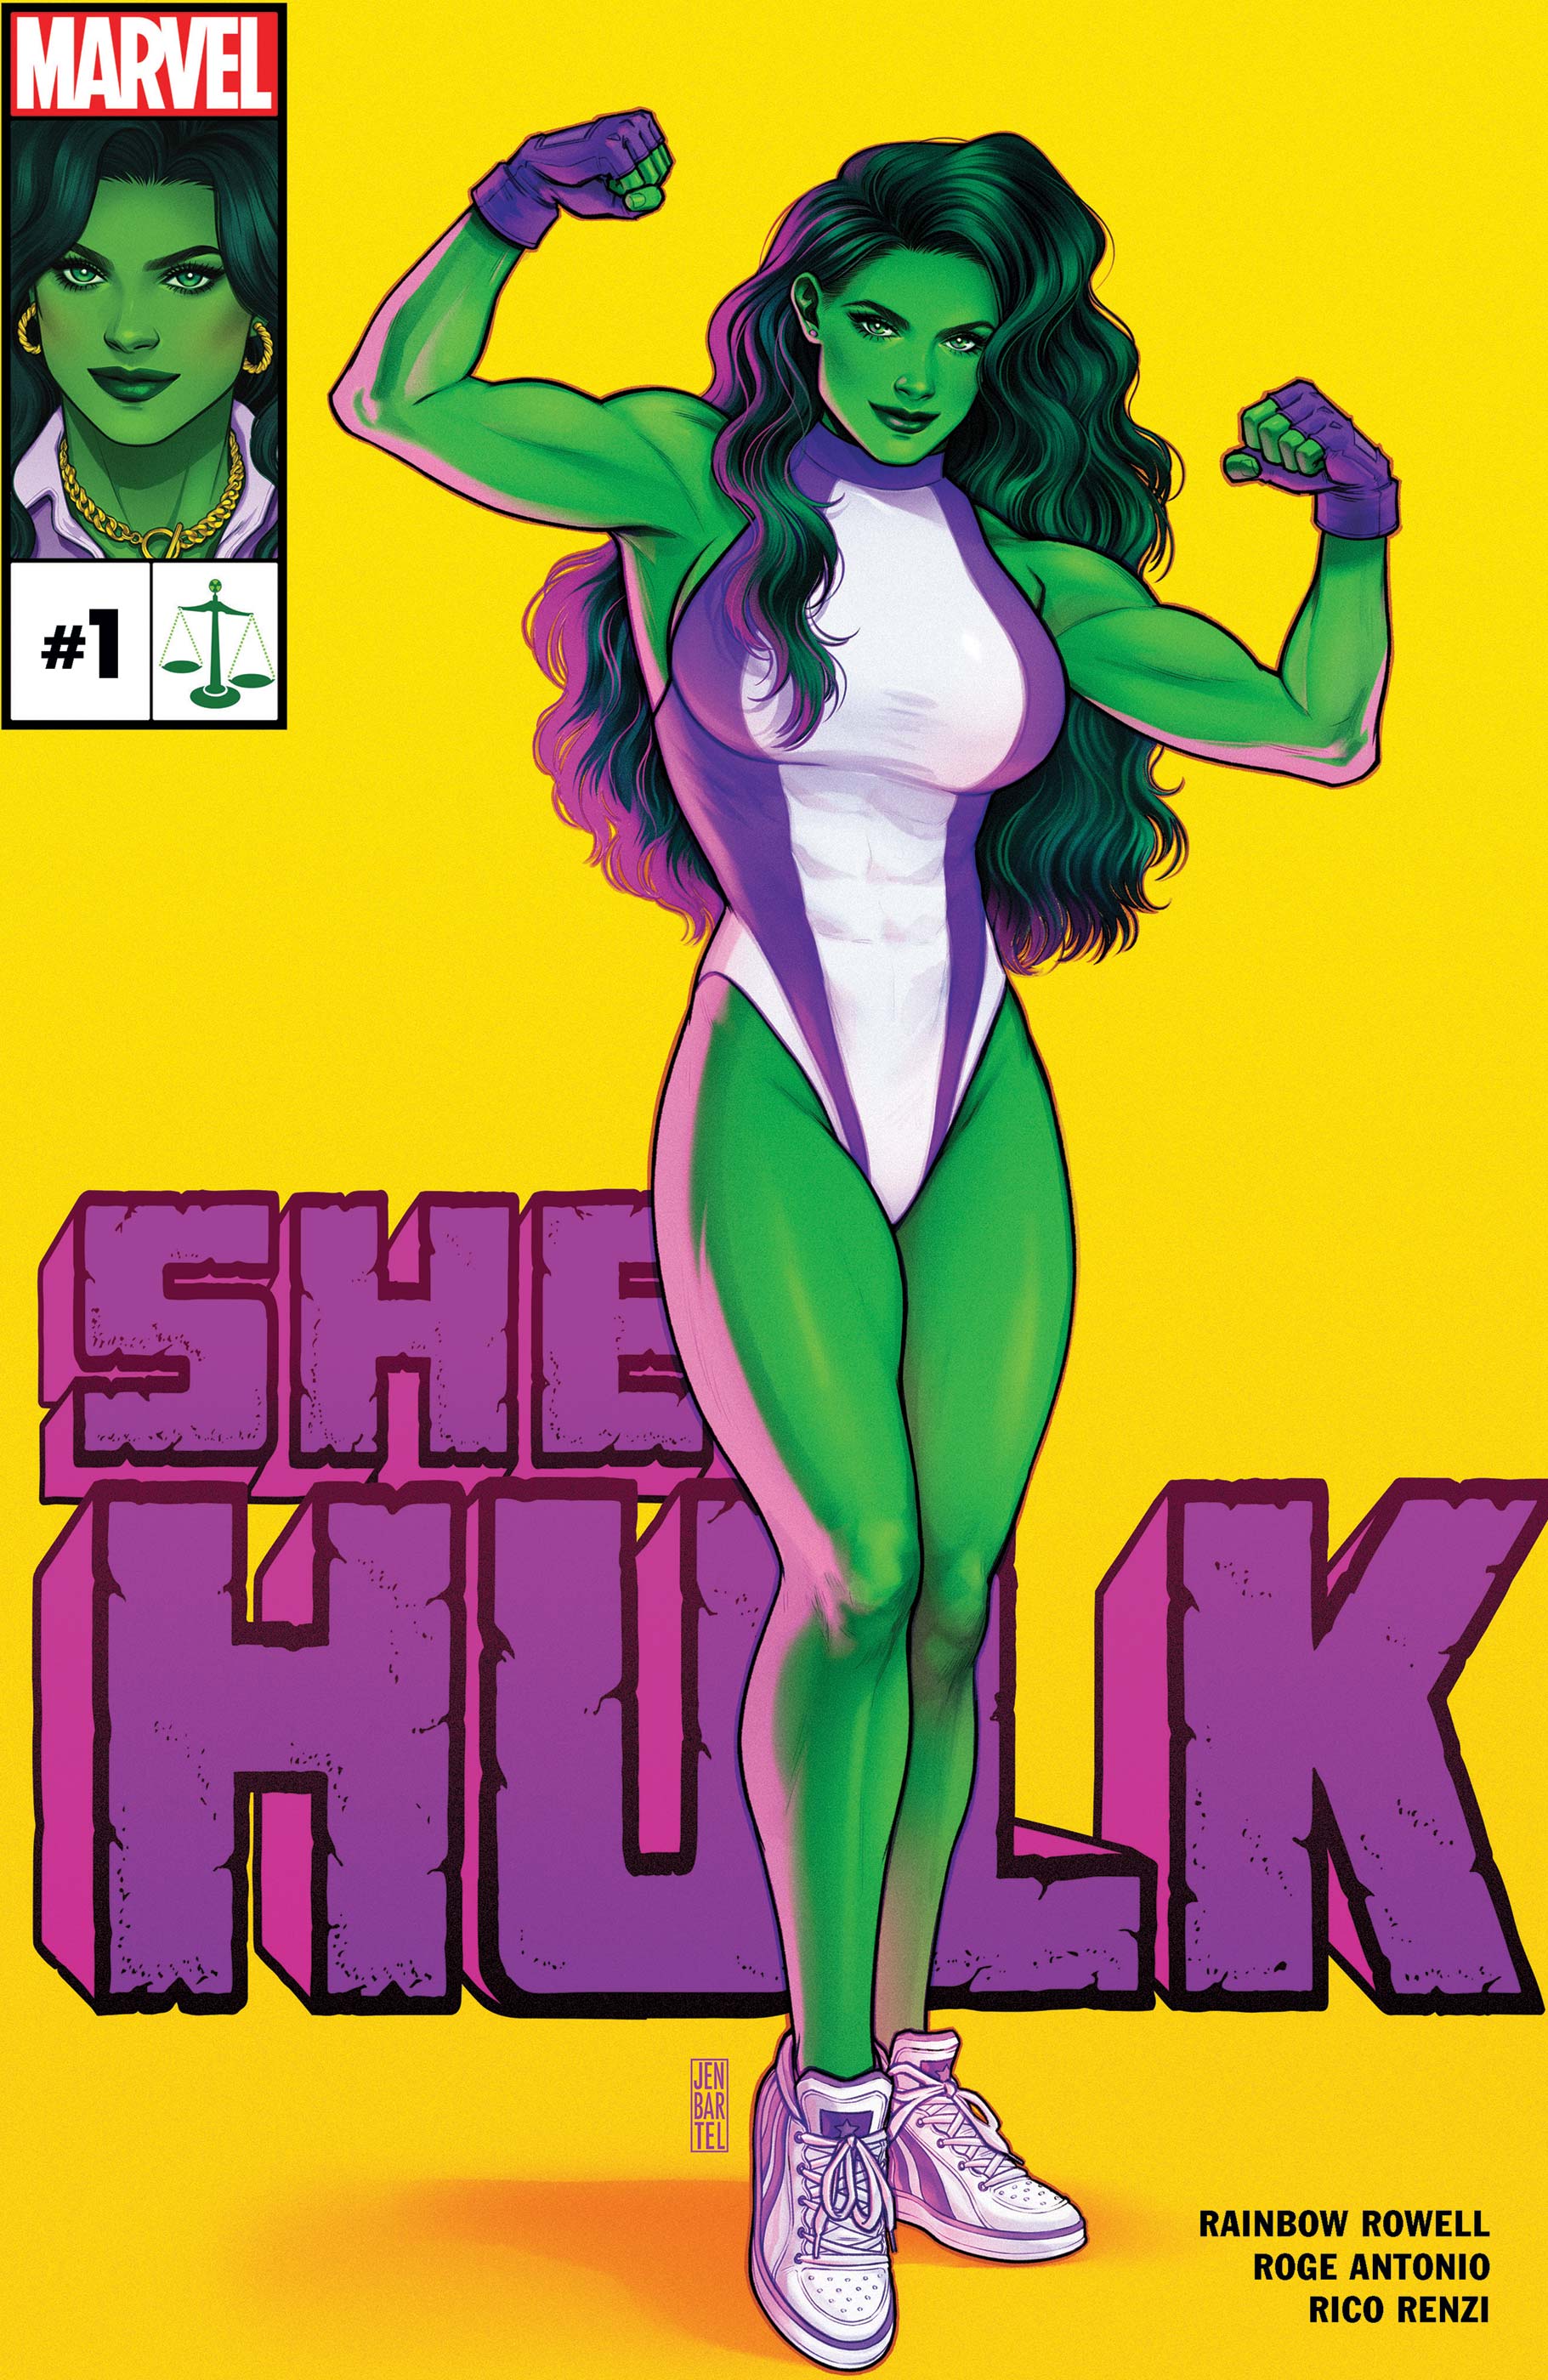 She hulk images marvel comics